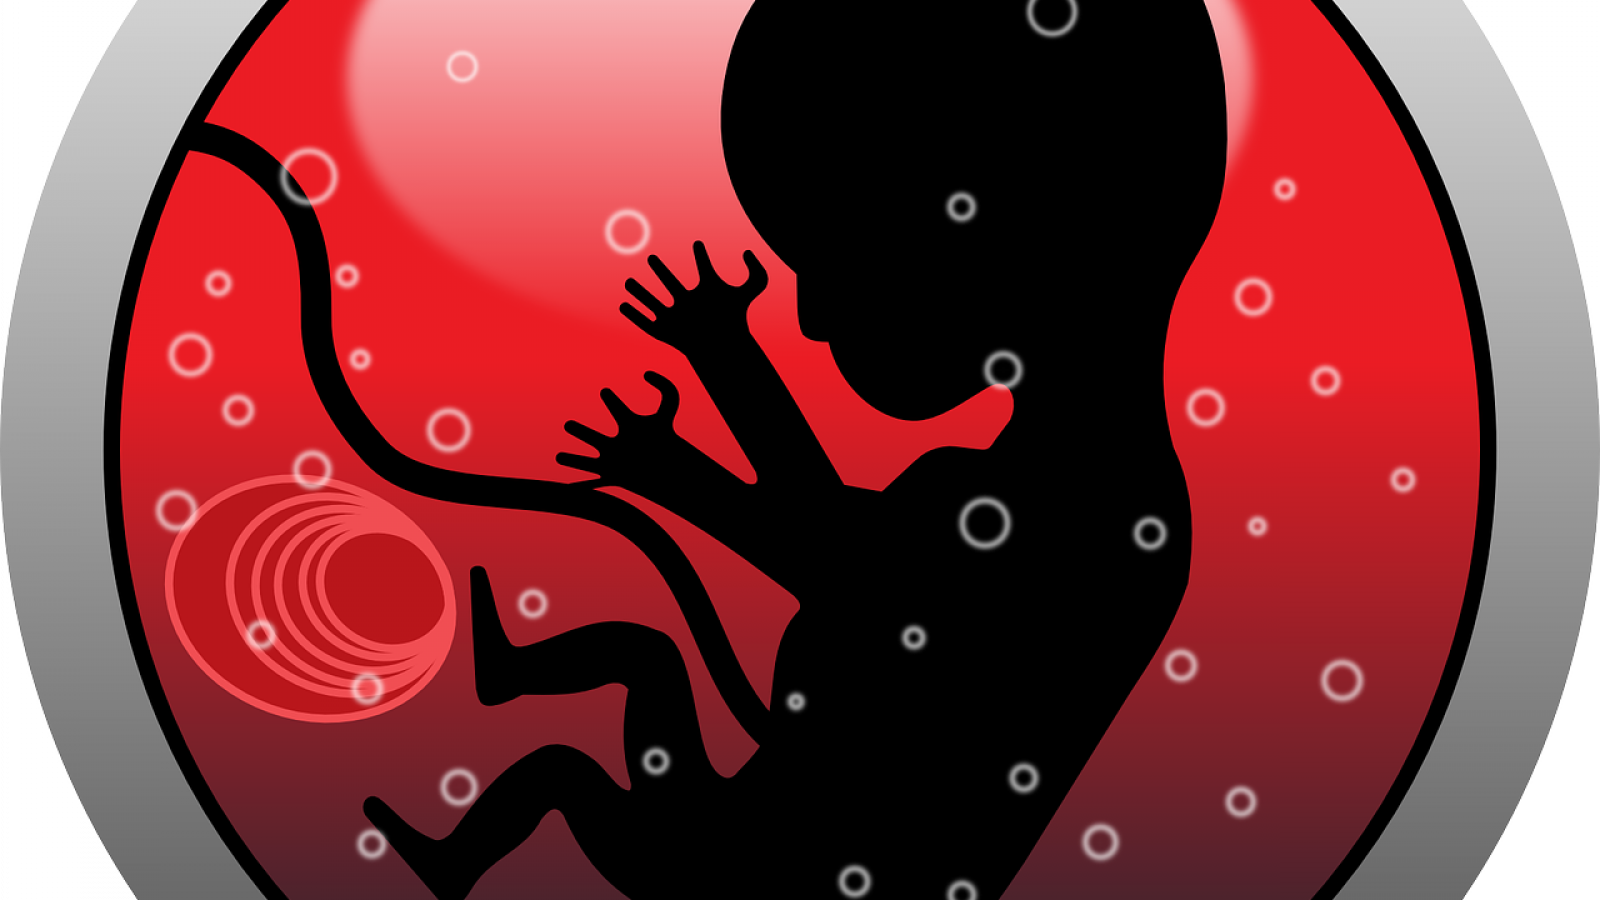 pregnancy,embryo,fetal